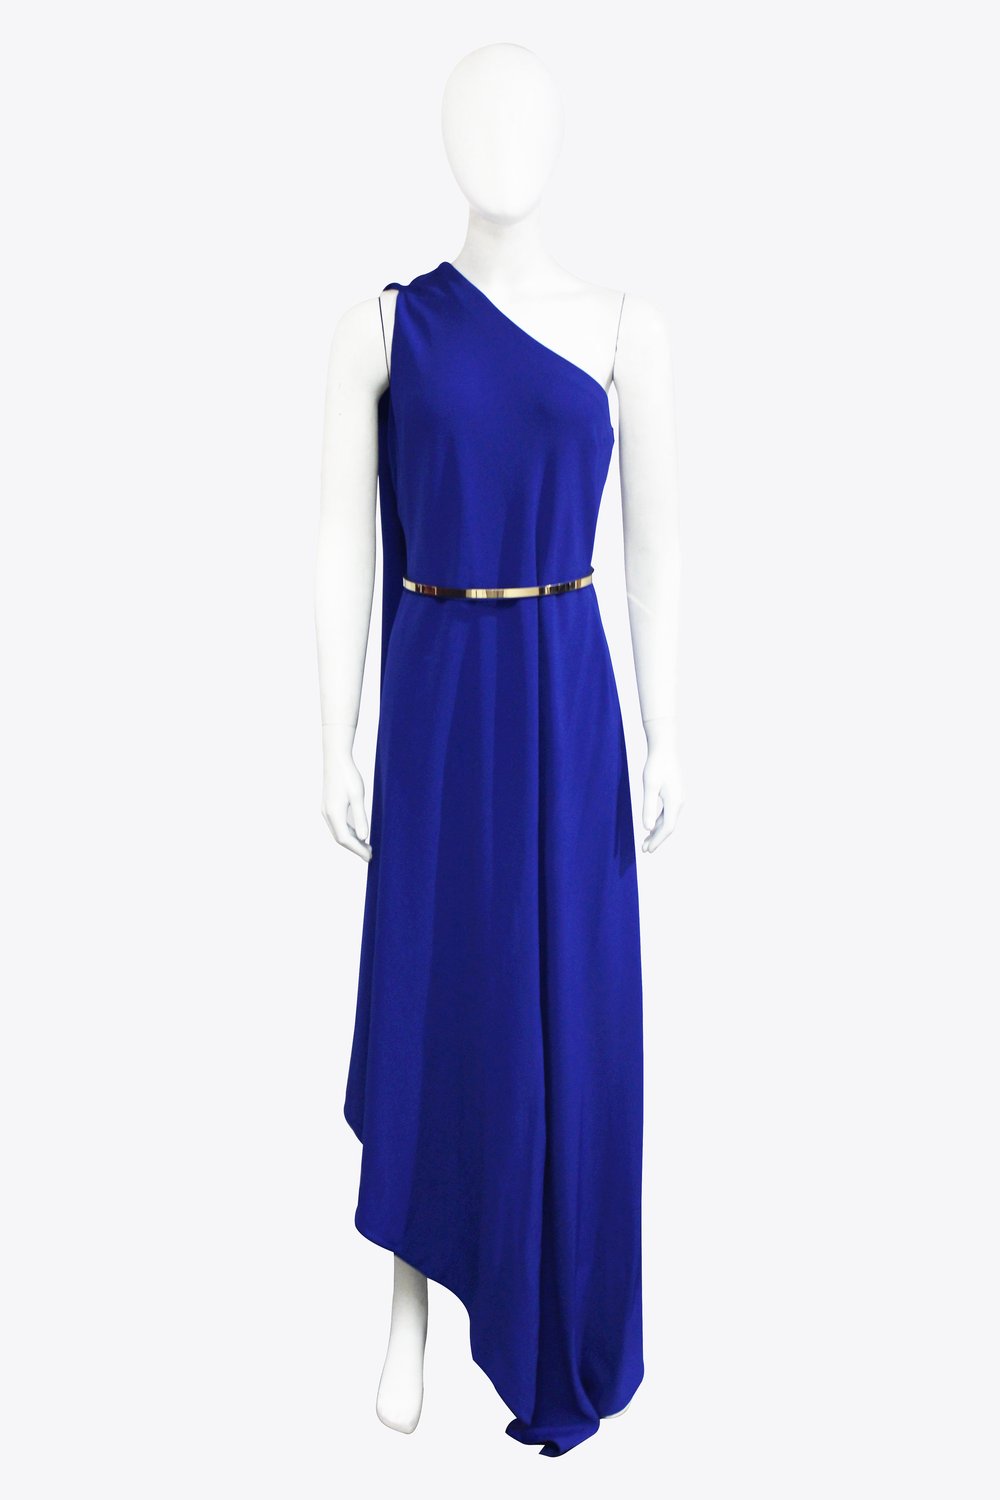 Stella McCartney Blue One Shoulder Cape Dress with Belt